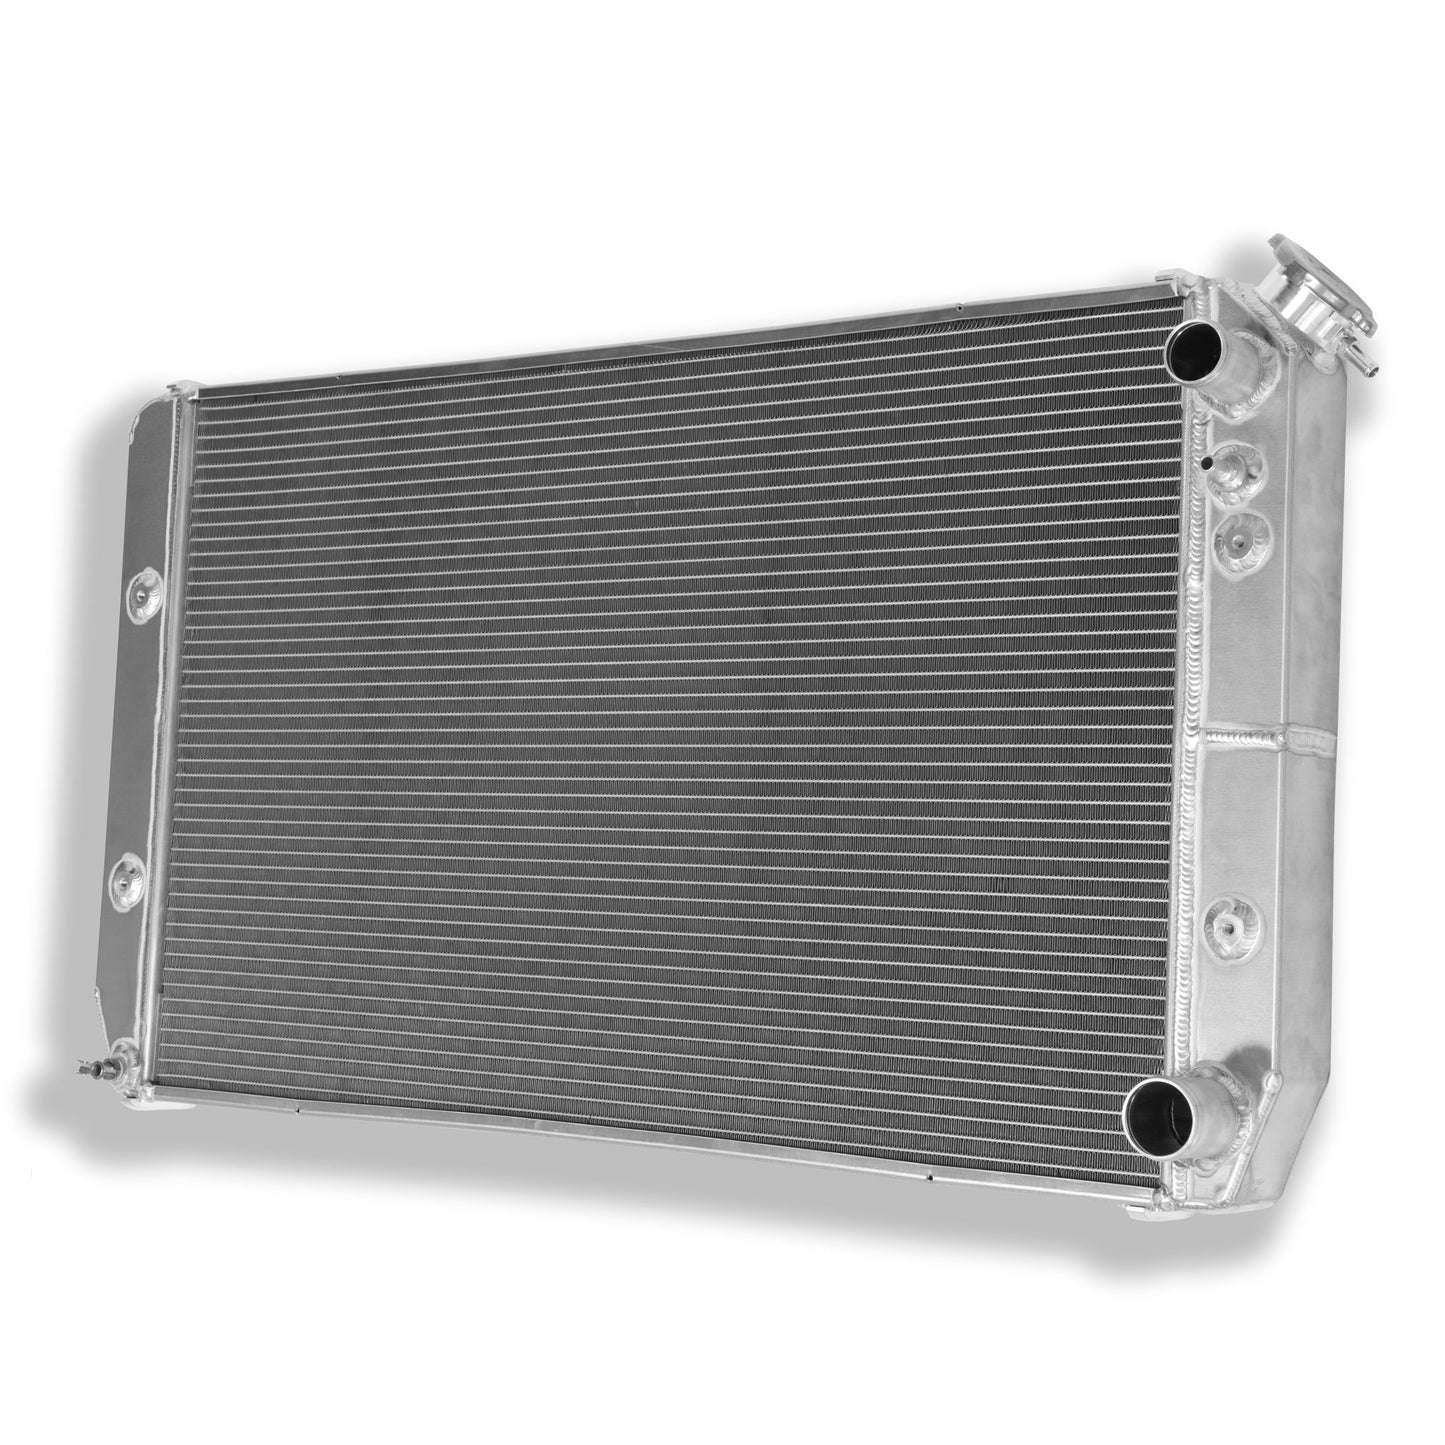 Flex-A-Lite - Extruded Core Radiator 315201